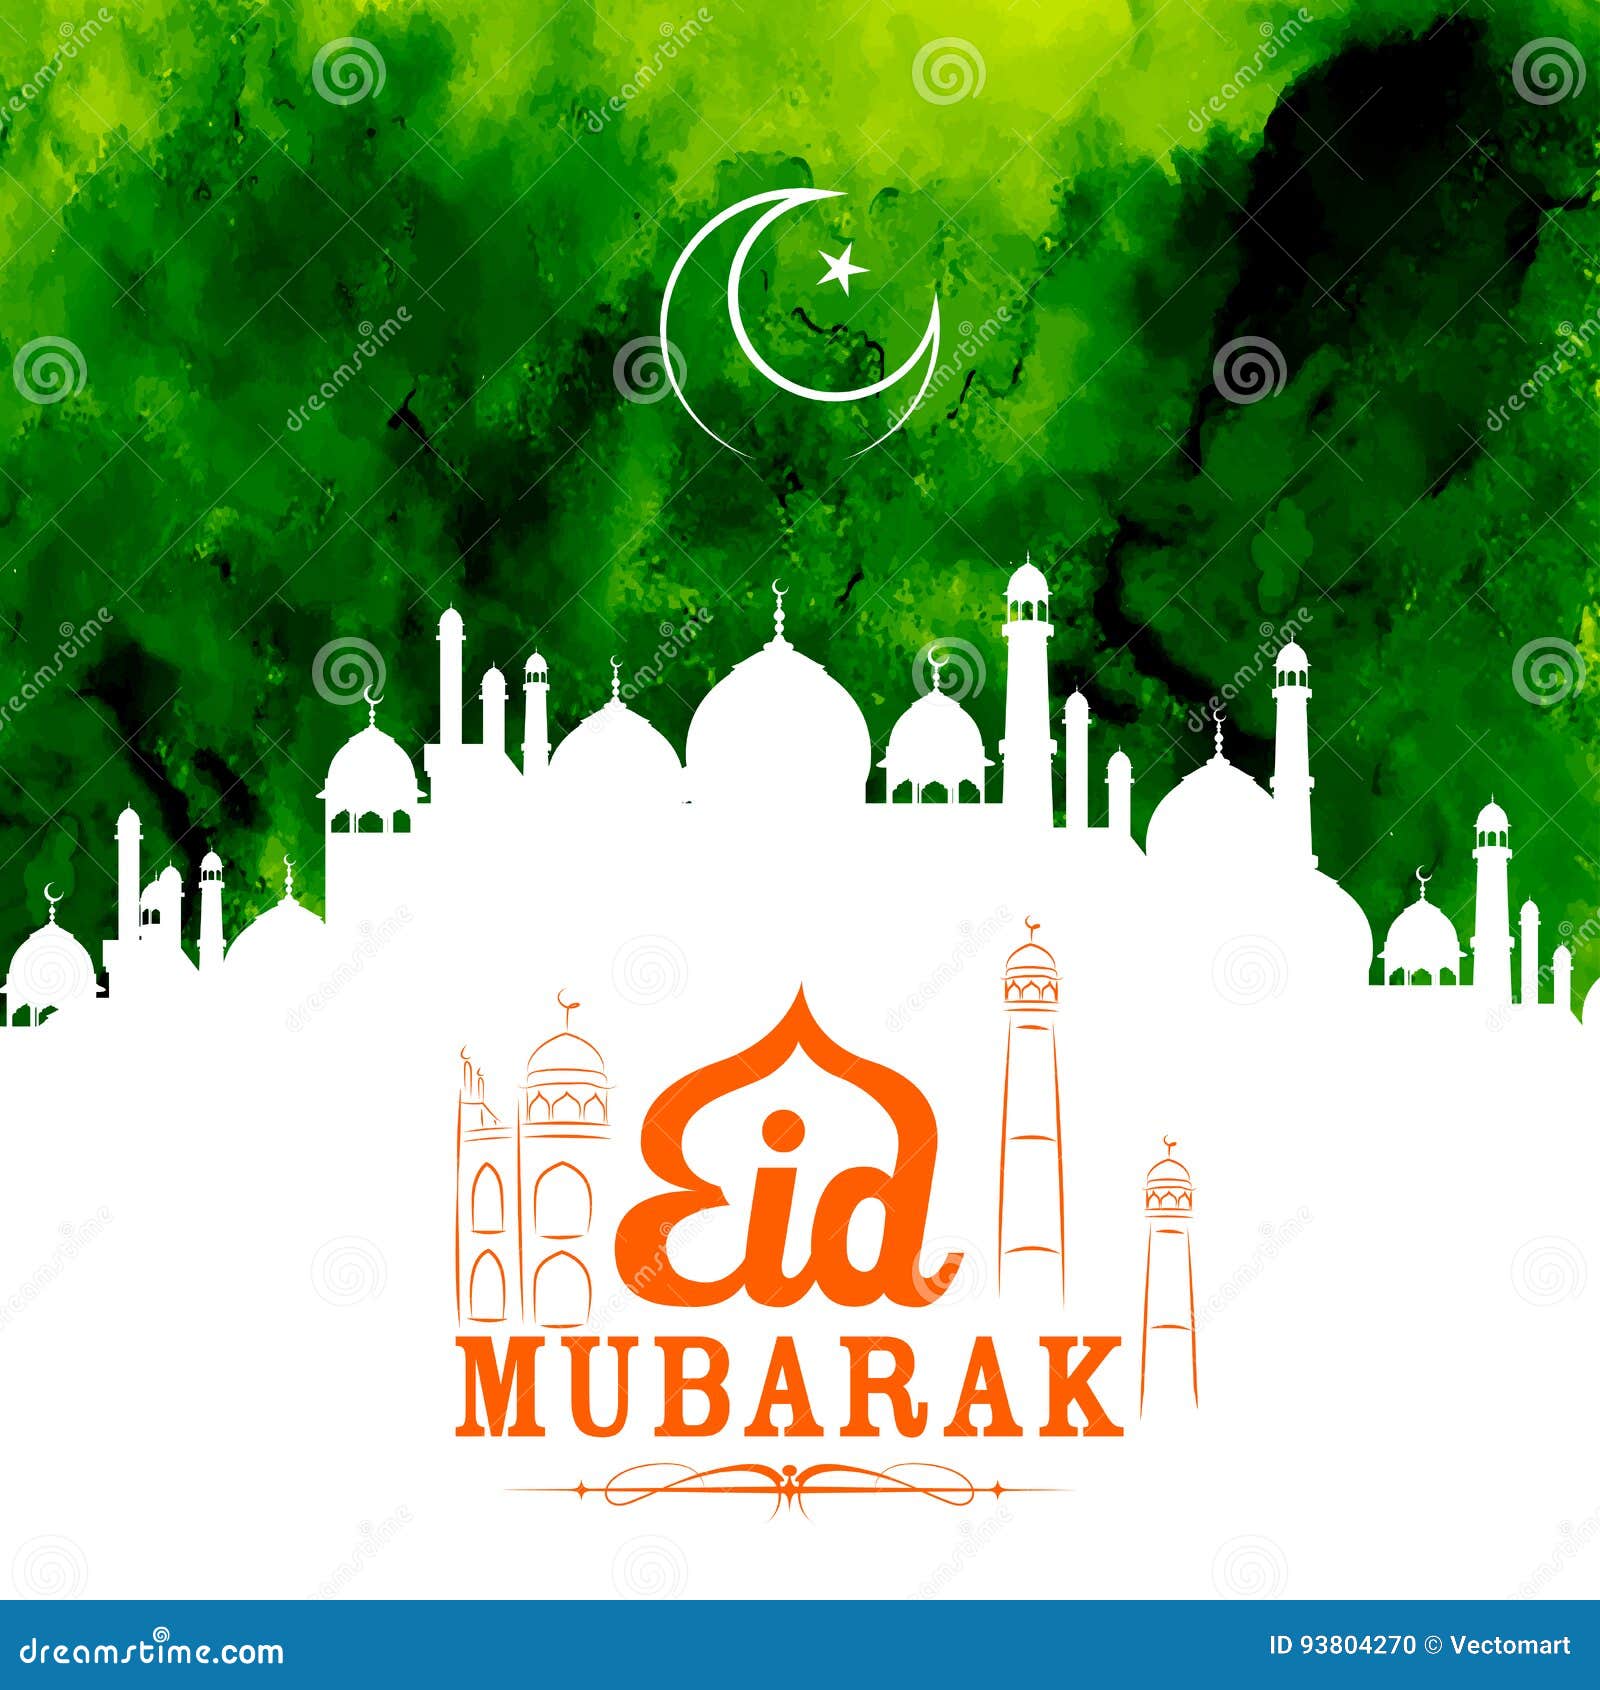 Eid Mubarak Happy Eid Greetings with Mosque Stock Vector ...